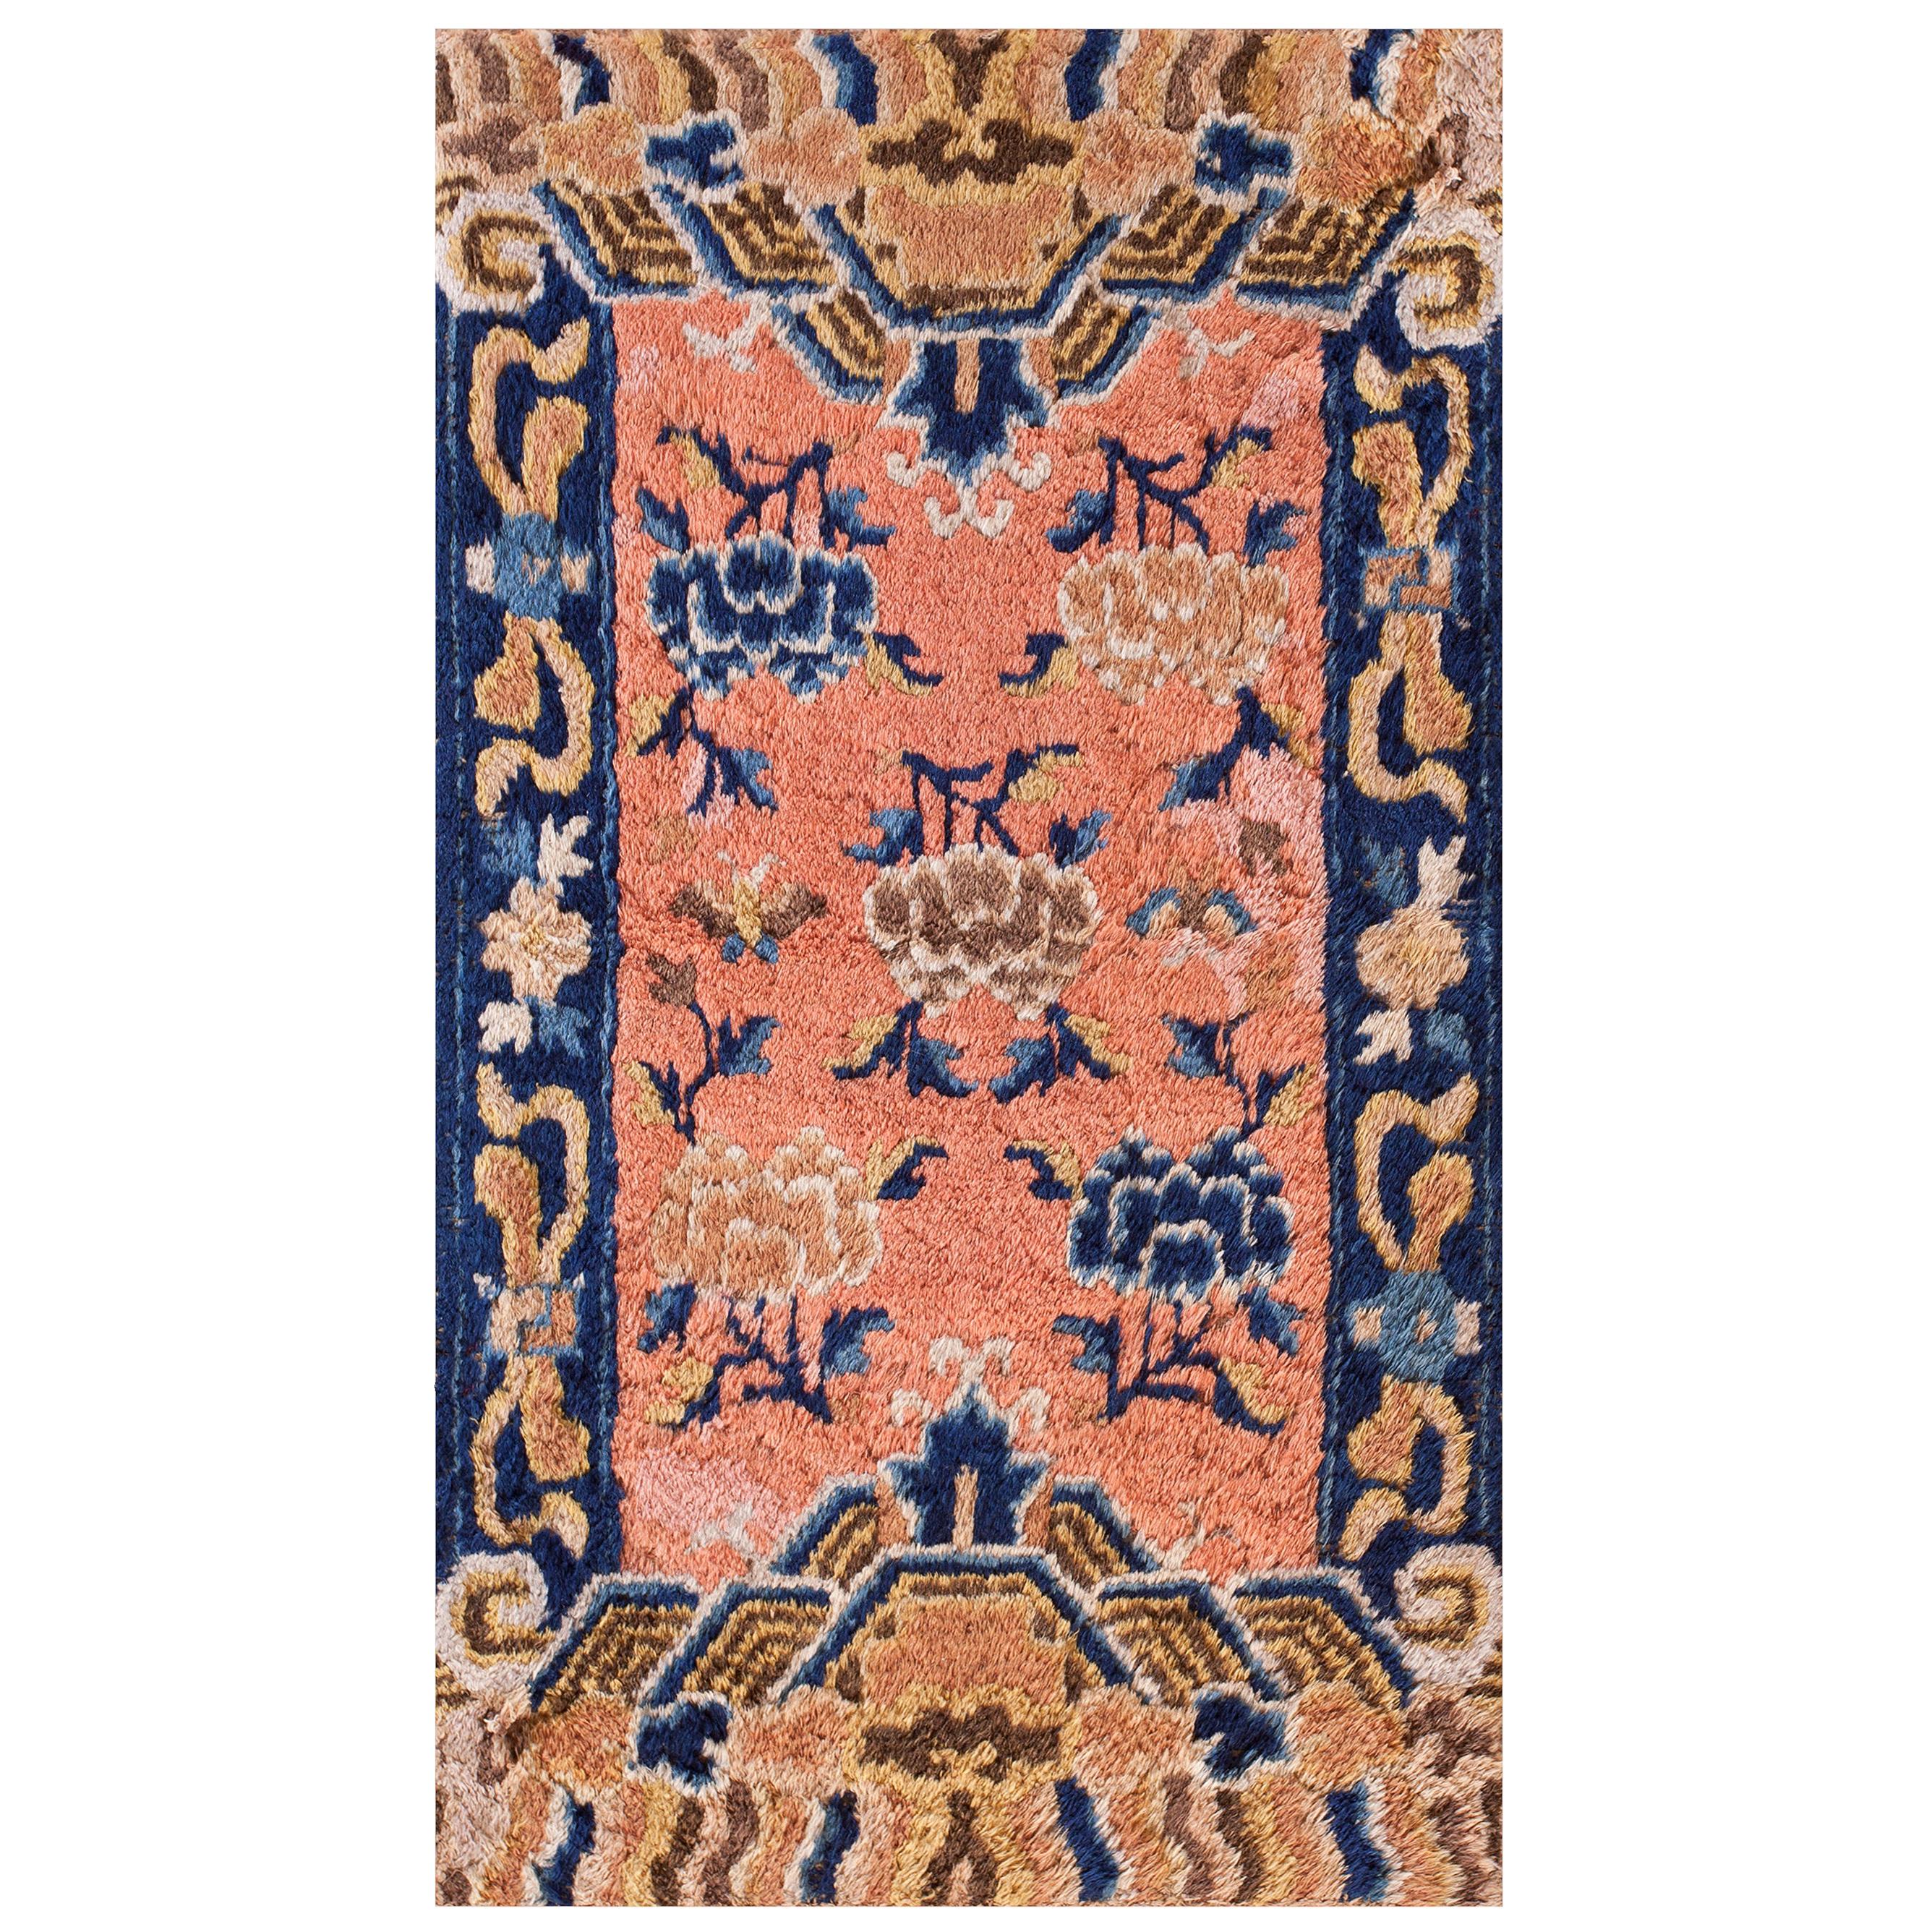 Late 18th Century N.W. Chinese Ningxia Carpet ( 2' x 3'4" - 62 x 102 )